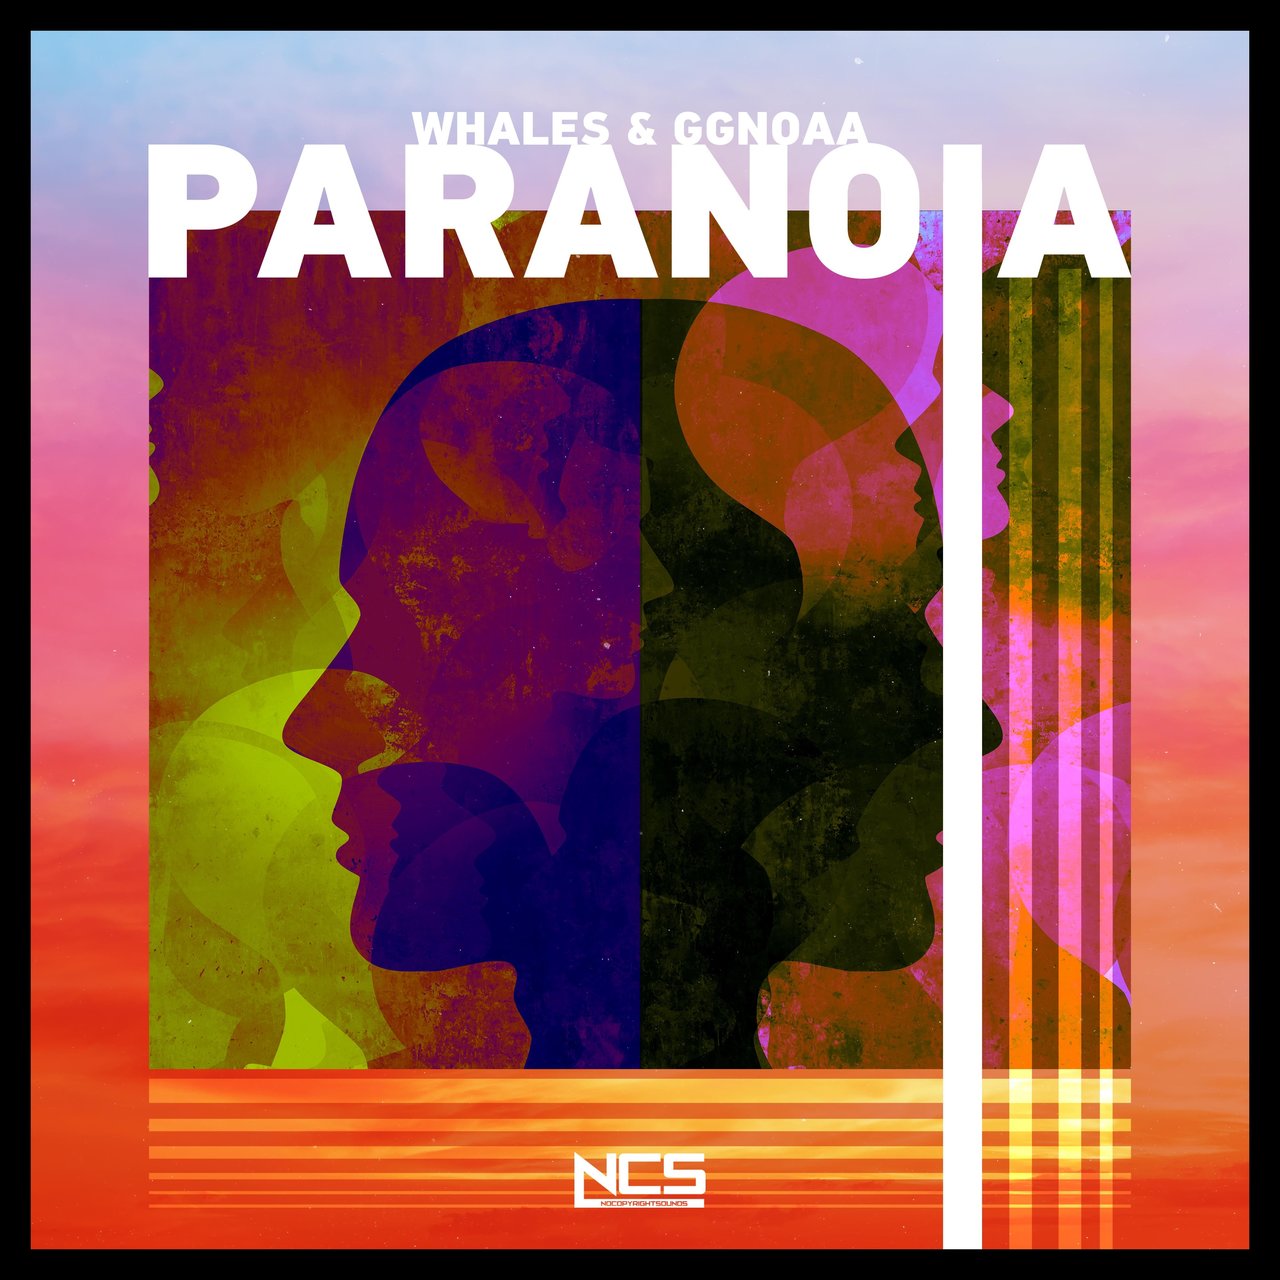 Whales & ggnoaa Paranoia cover artwork